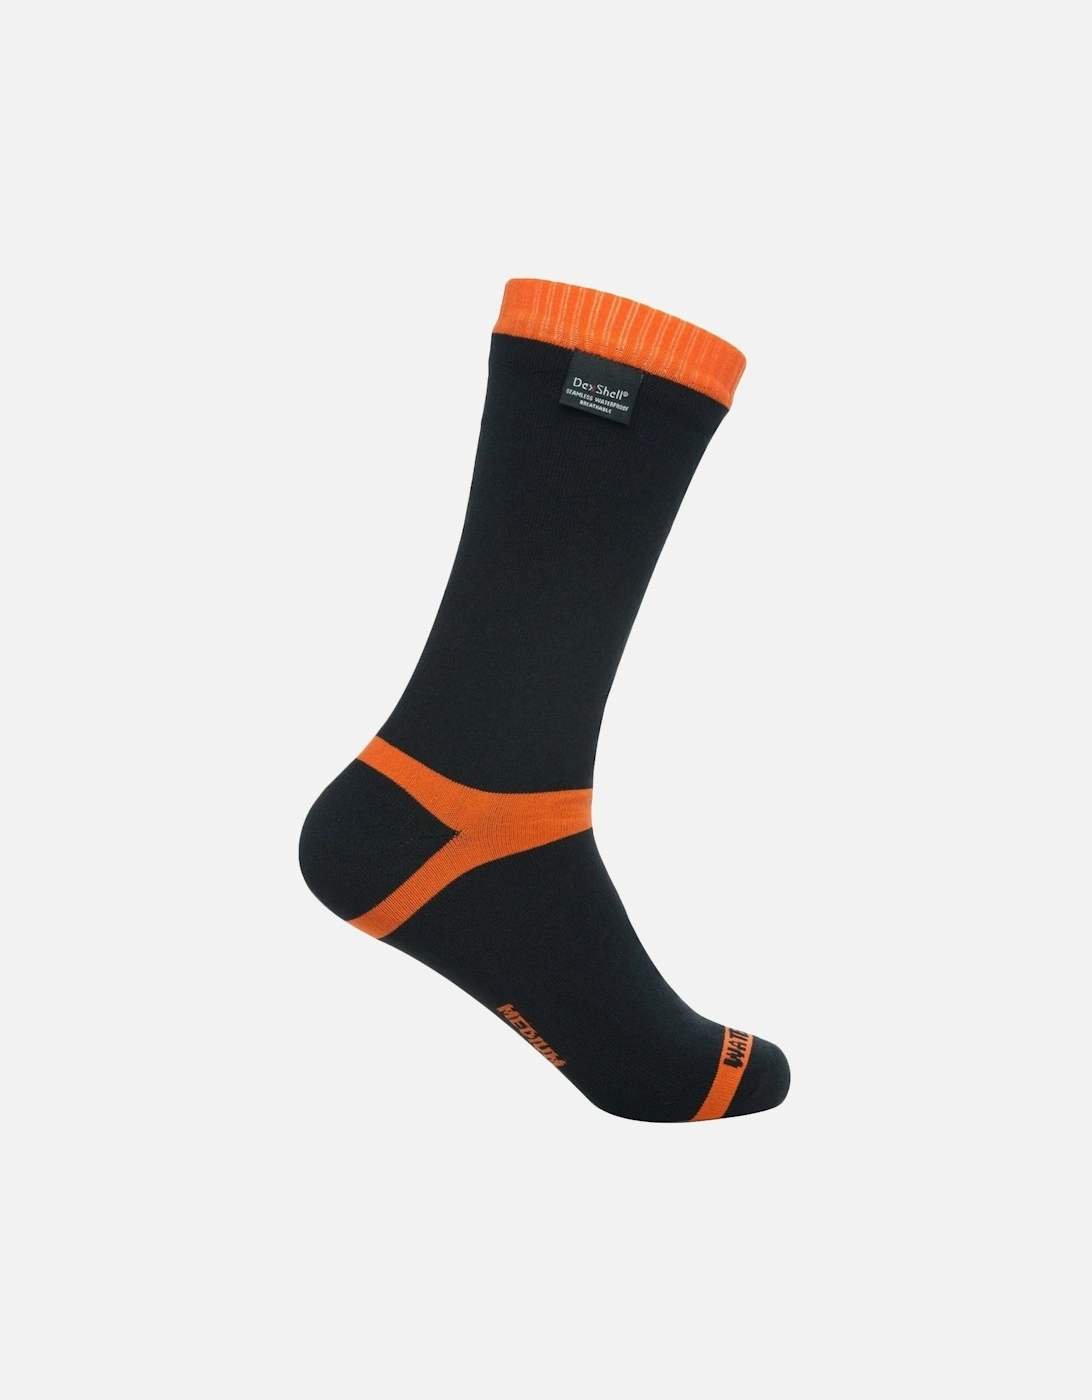 Hytherm PRO Waterproof Socks - Black/Orange, 2 of 1